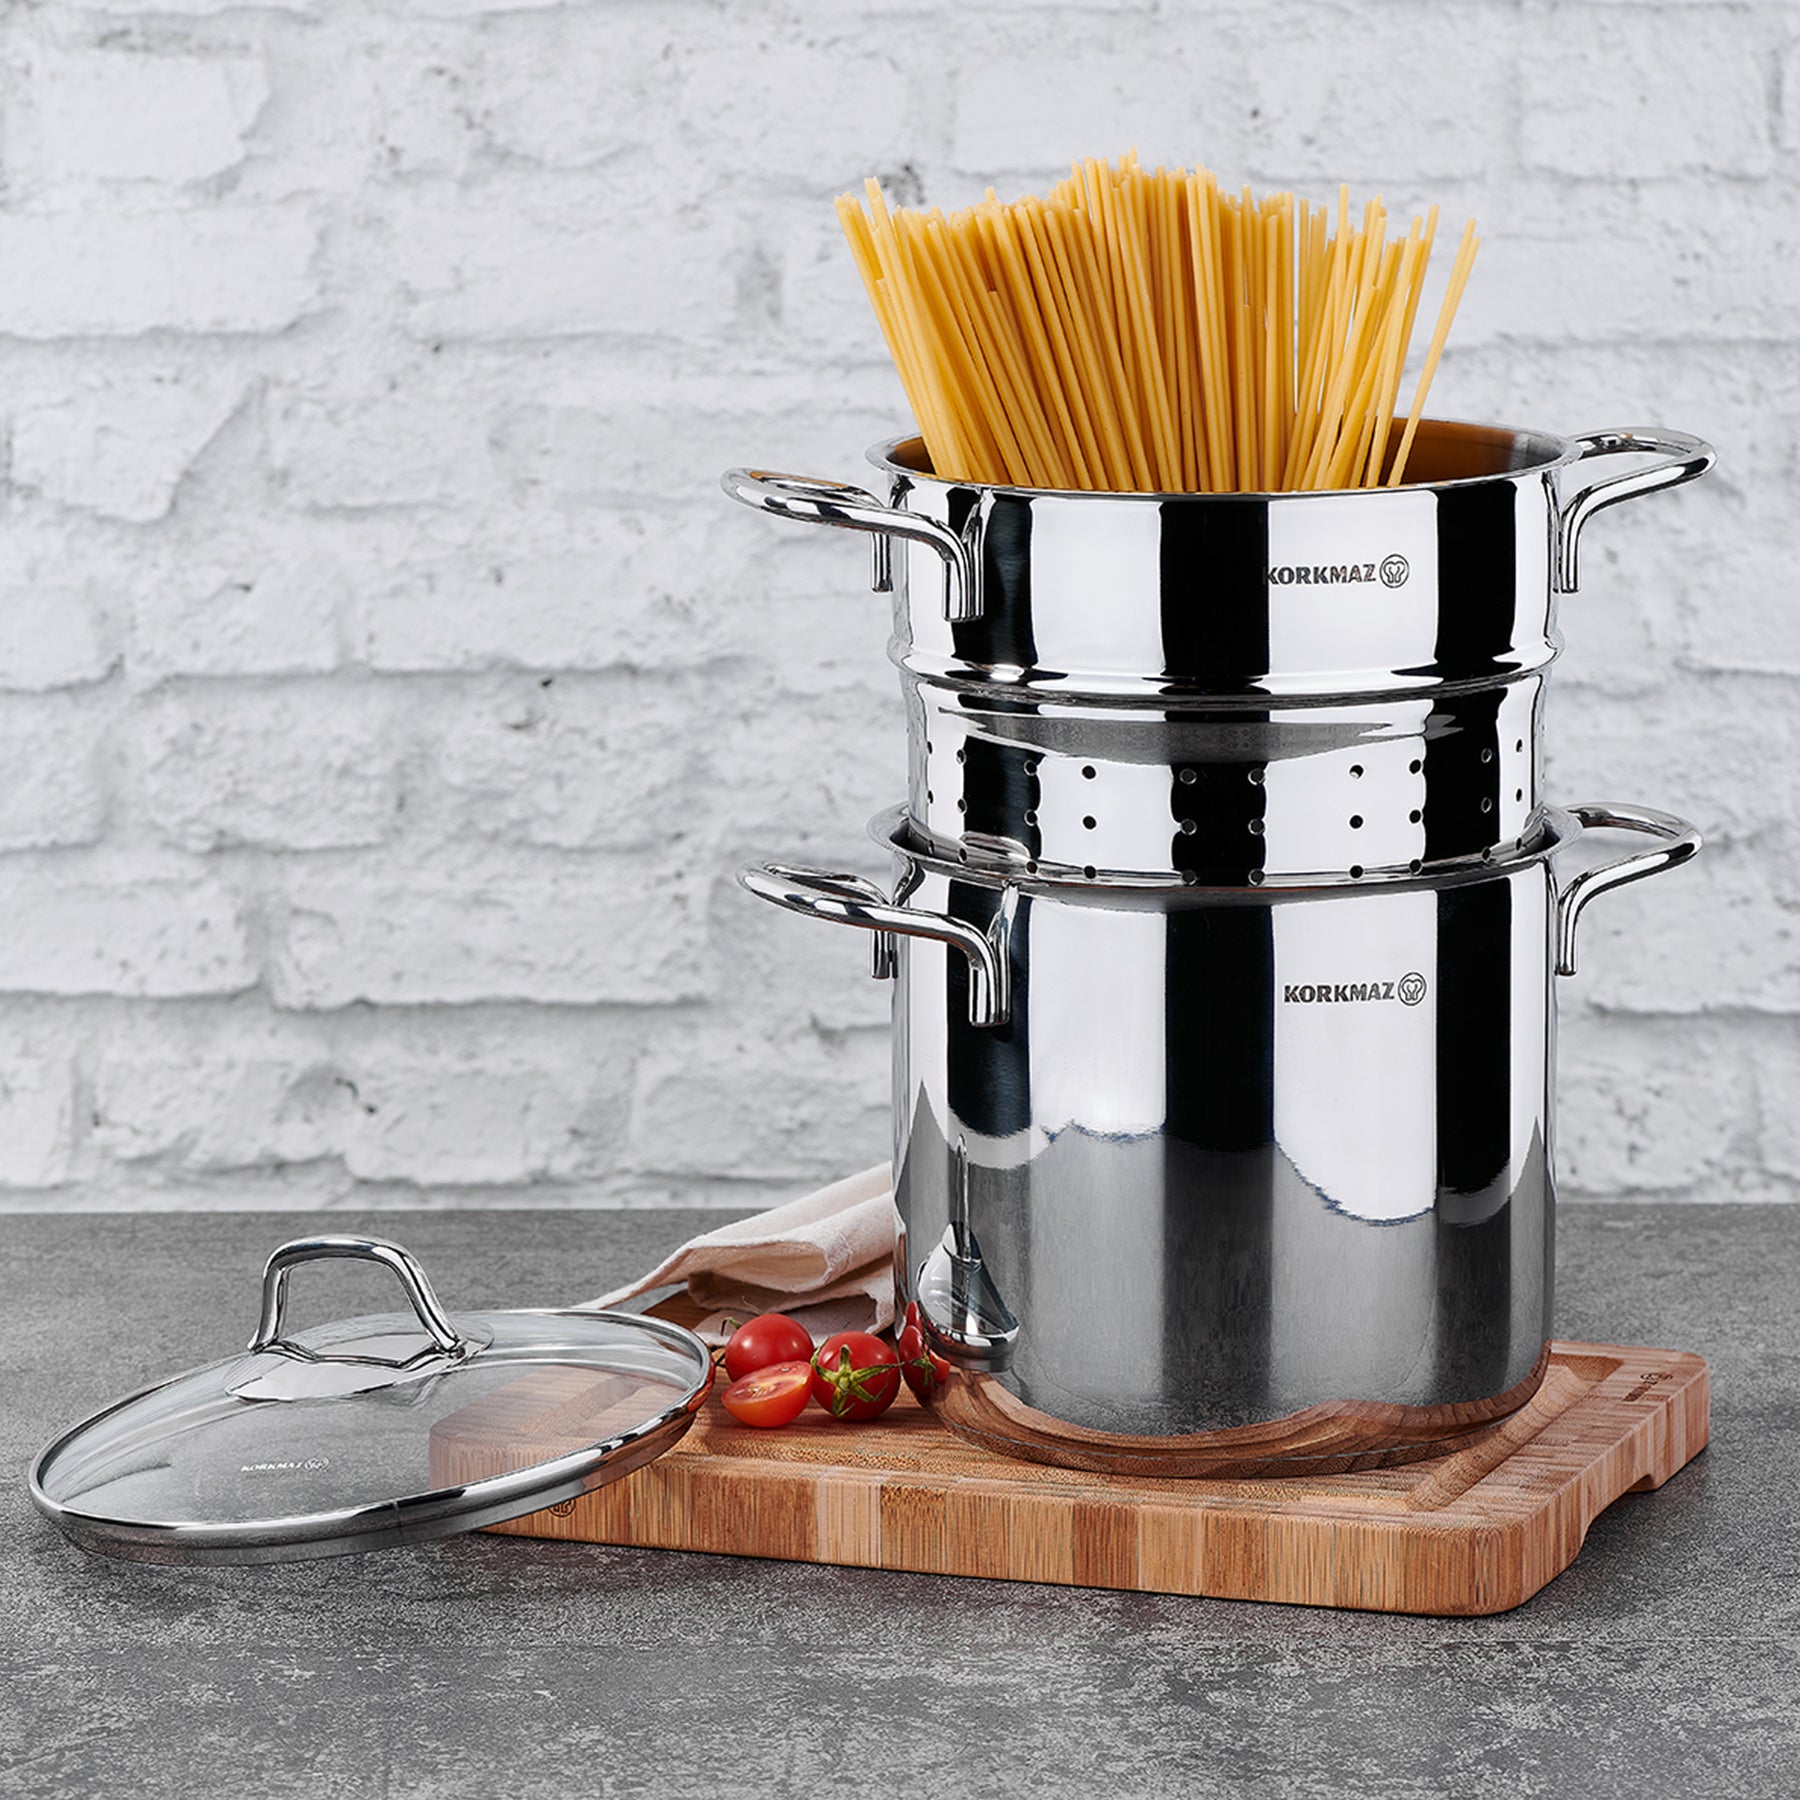 Spaghetti cookware set 3 Pcs, Silver